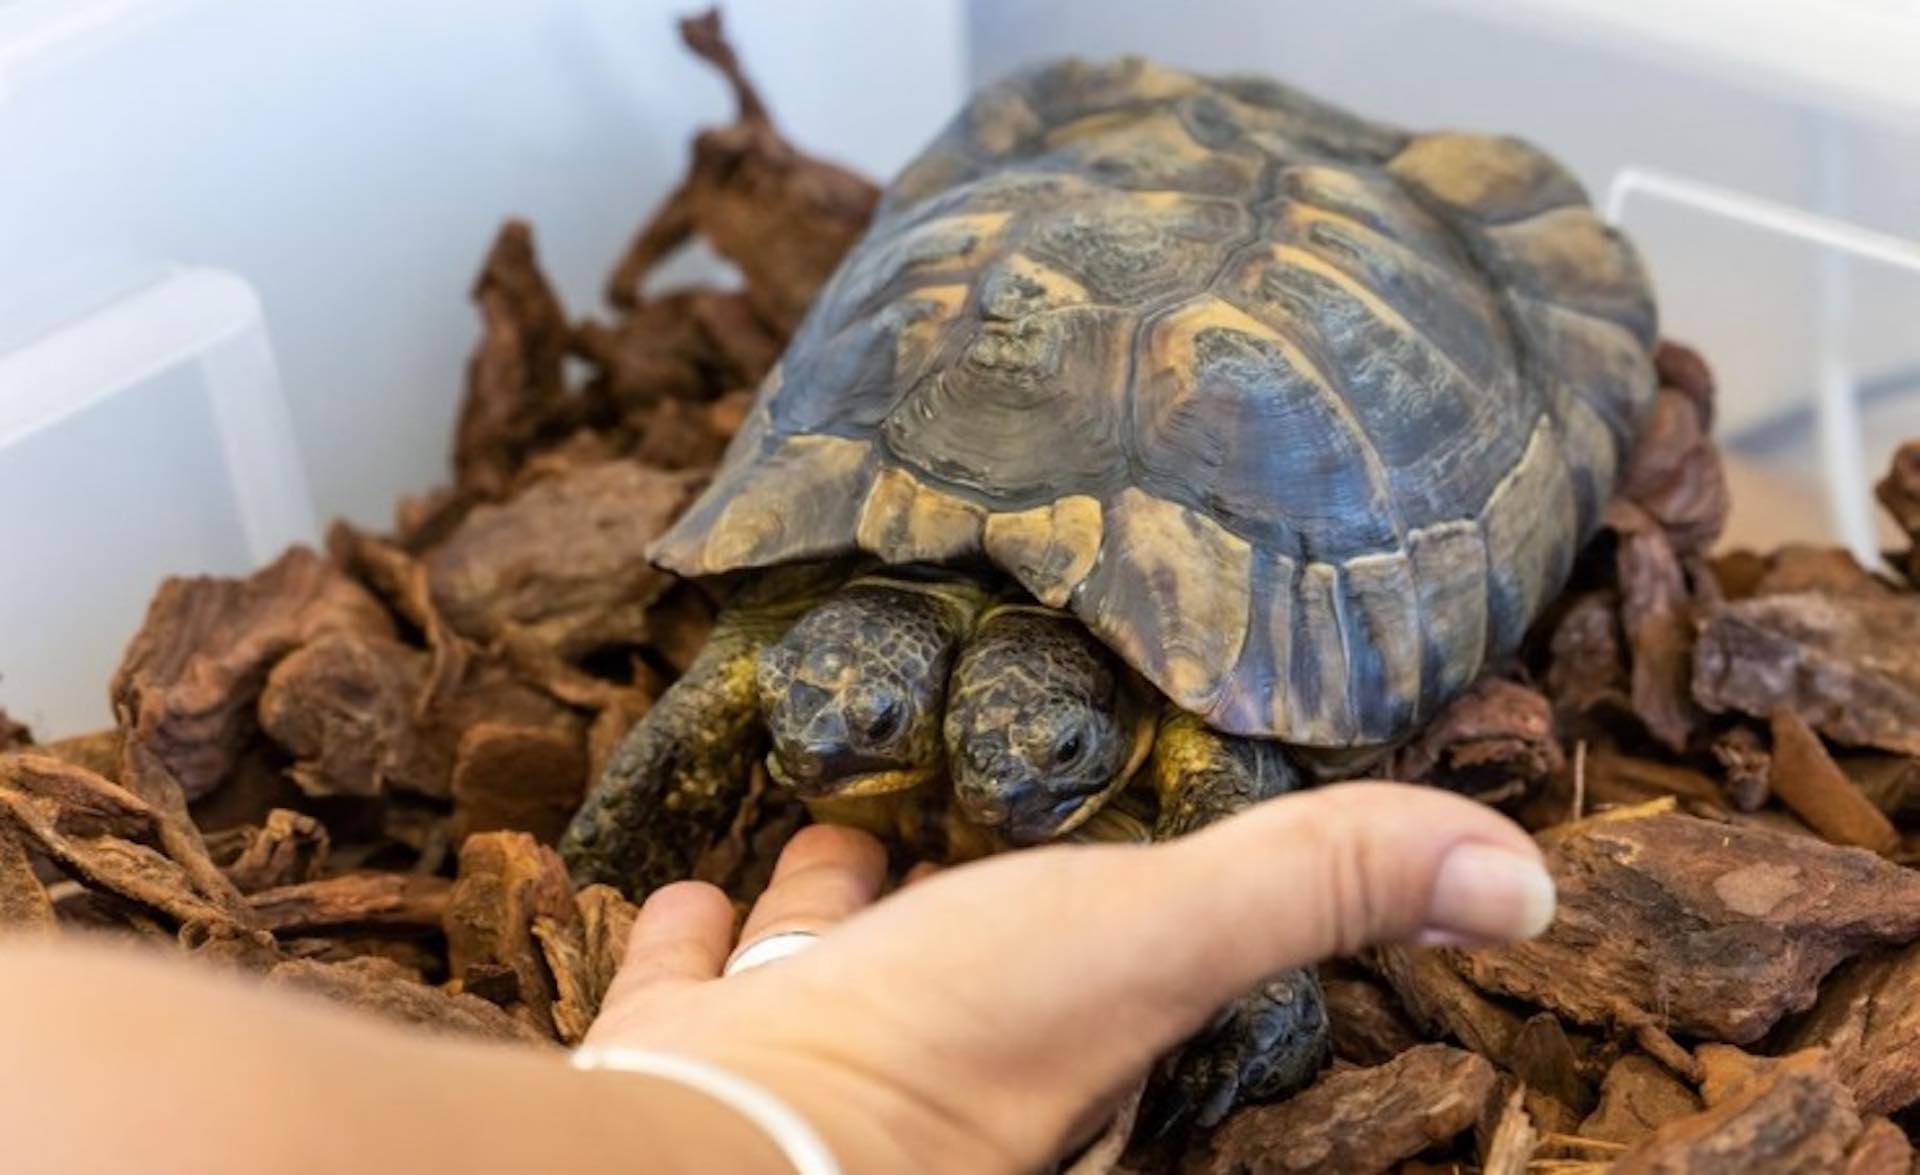 Countdown to 25th birthday of two-headed tortoise Janus